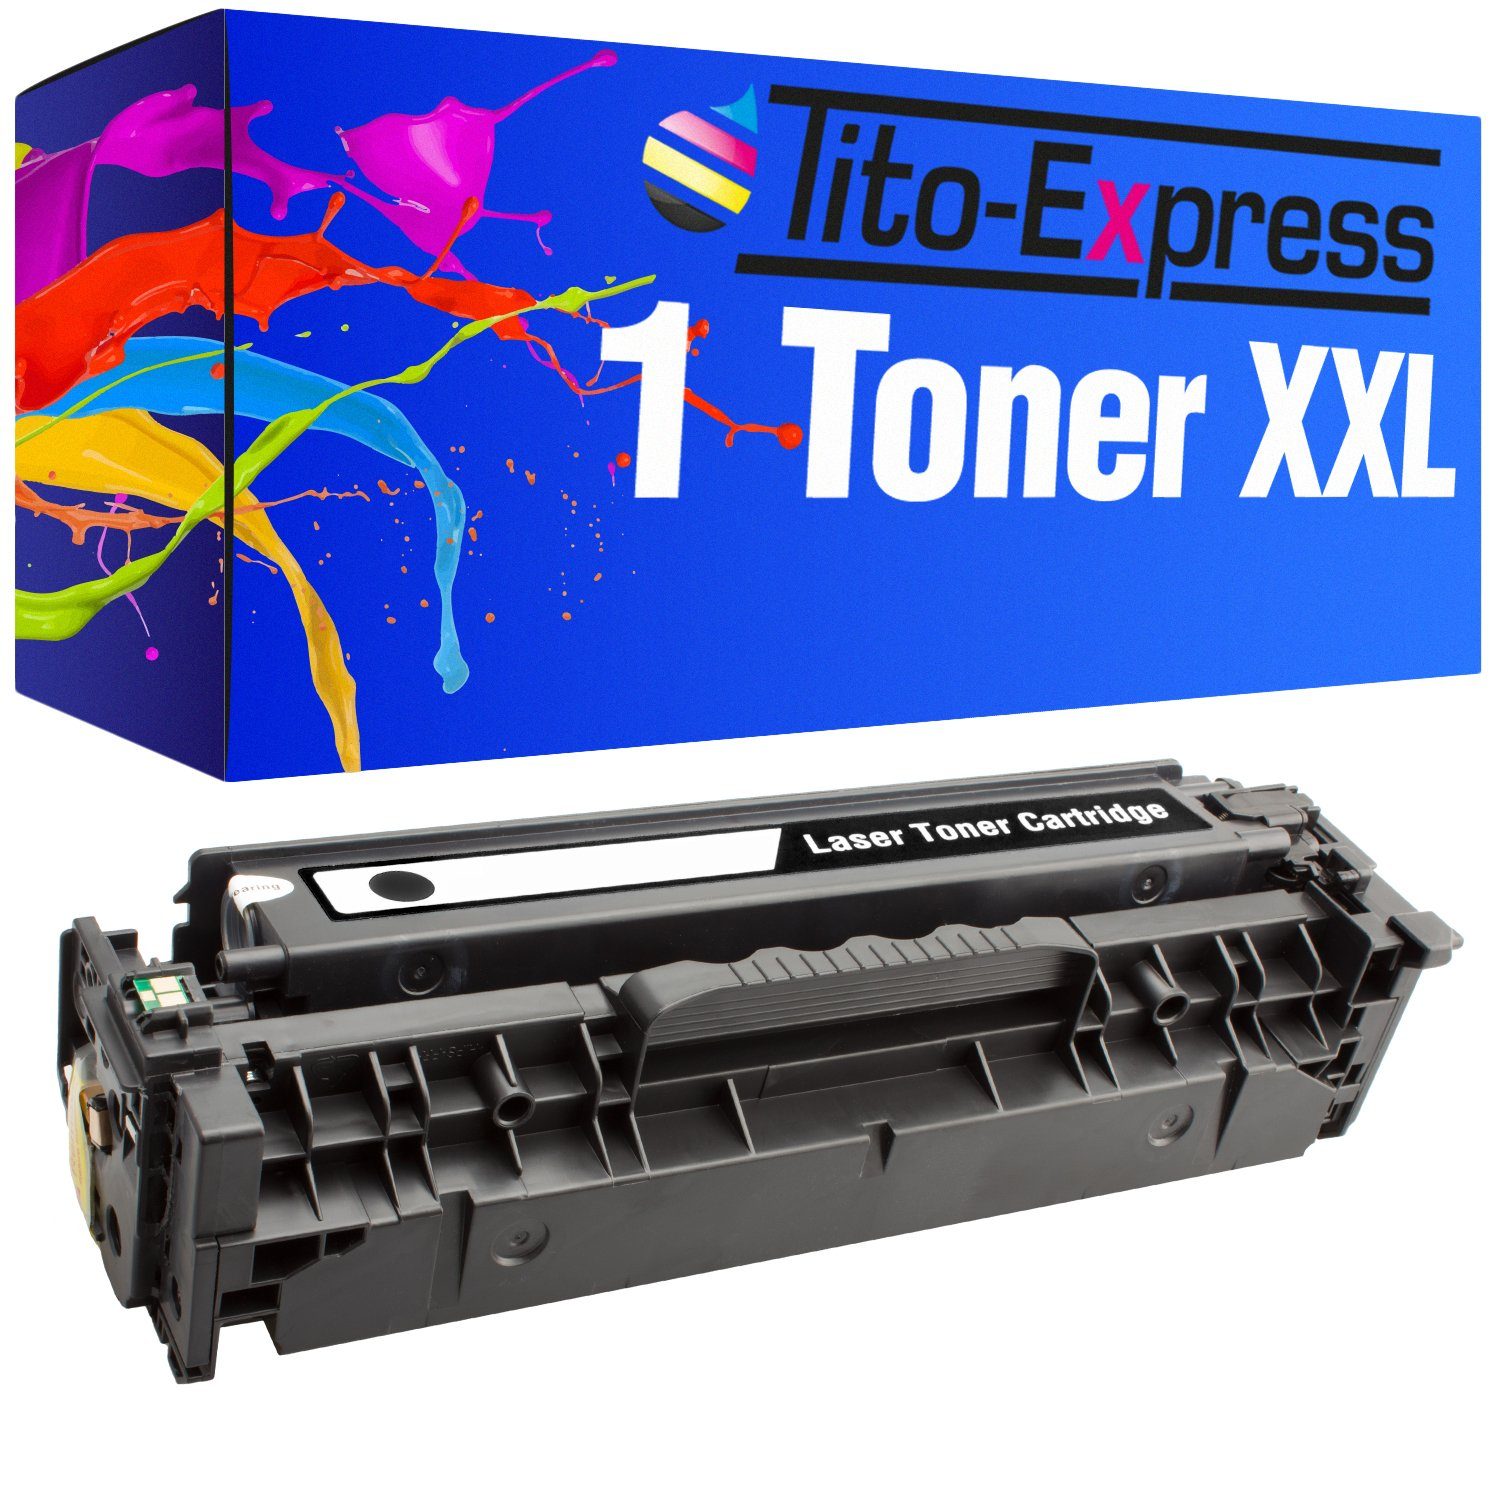 Tito-Express Tonerpatrone ersetzt HP CE410X HP CE 410 X HPCE410X HP 305X, (1x Black), für Laserjet Pro 400 Color M451dn M451dw M451nw MFP M475dn M475dw